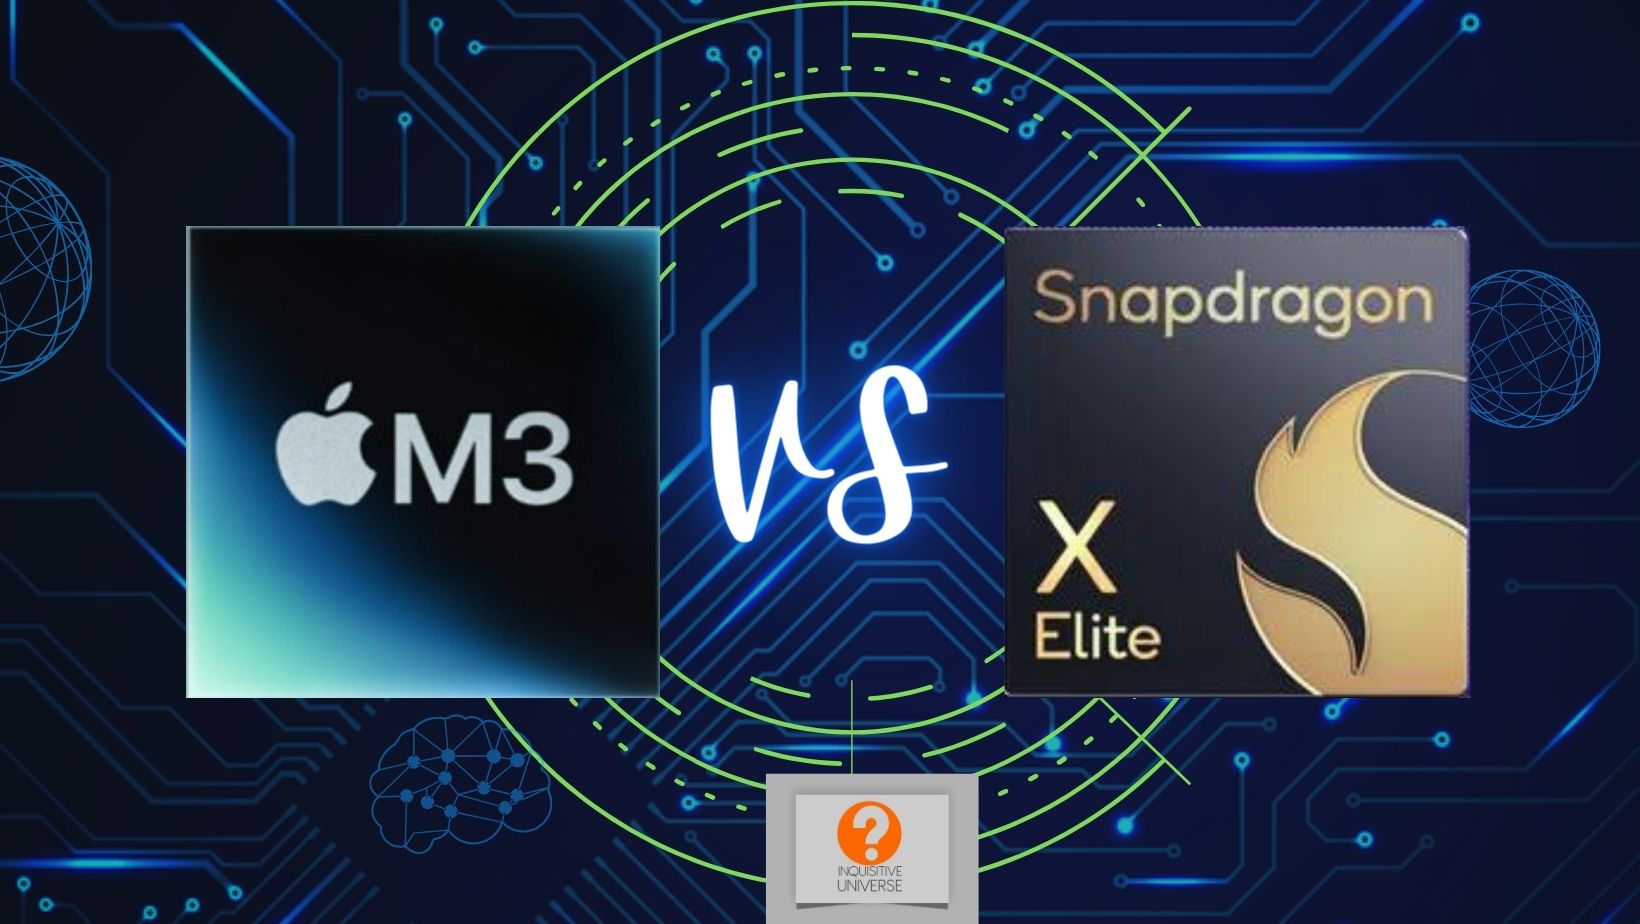 Apple M3 Vs. Snapdragon X Elite